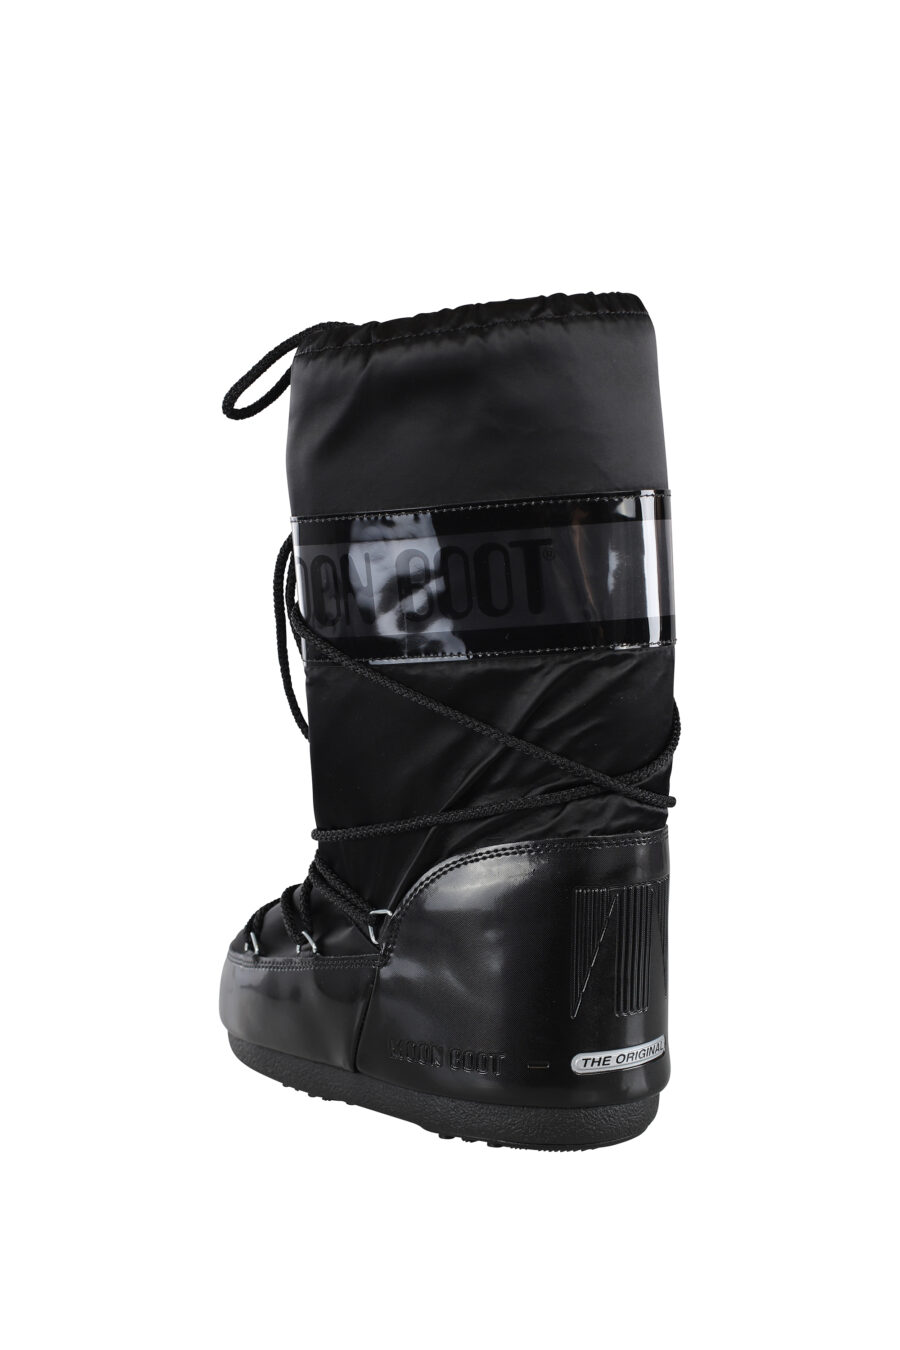 Black snow boots with monochrome white logo - IMG 6802